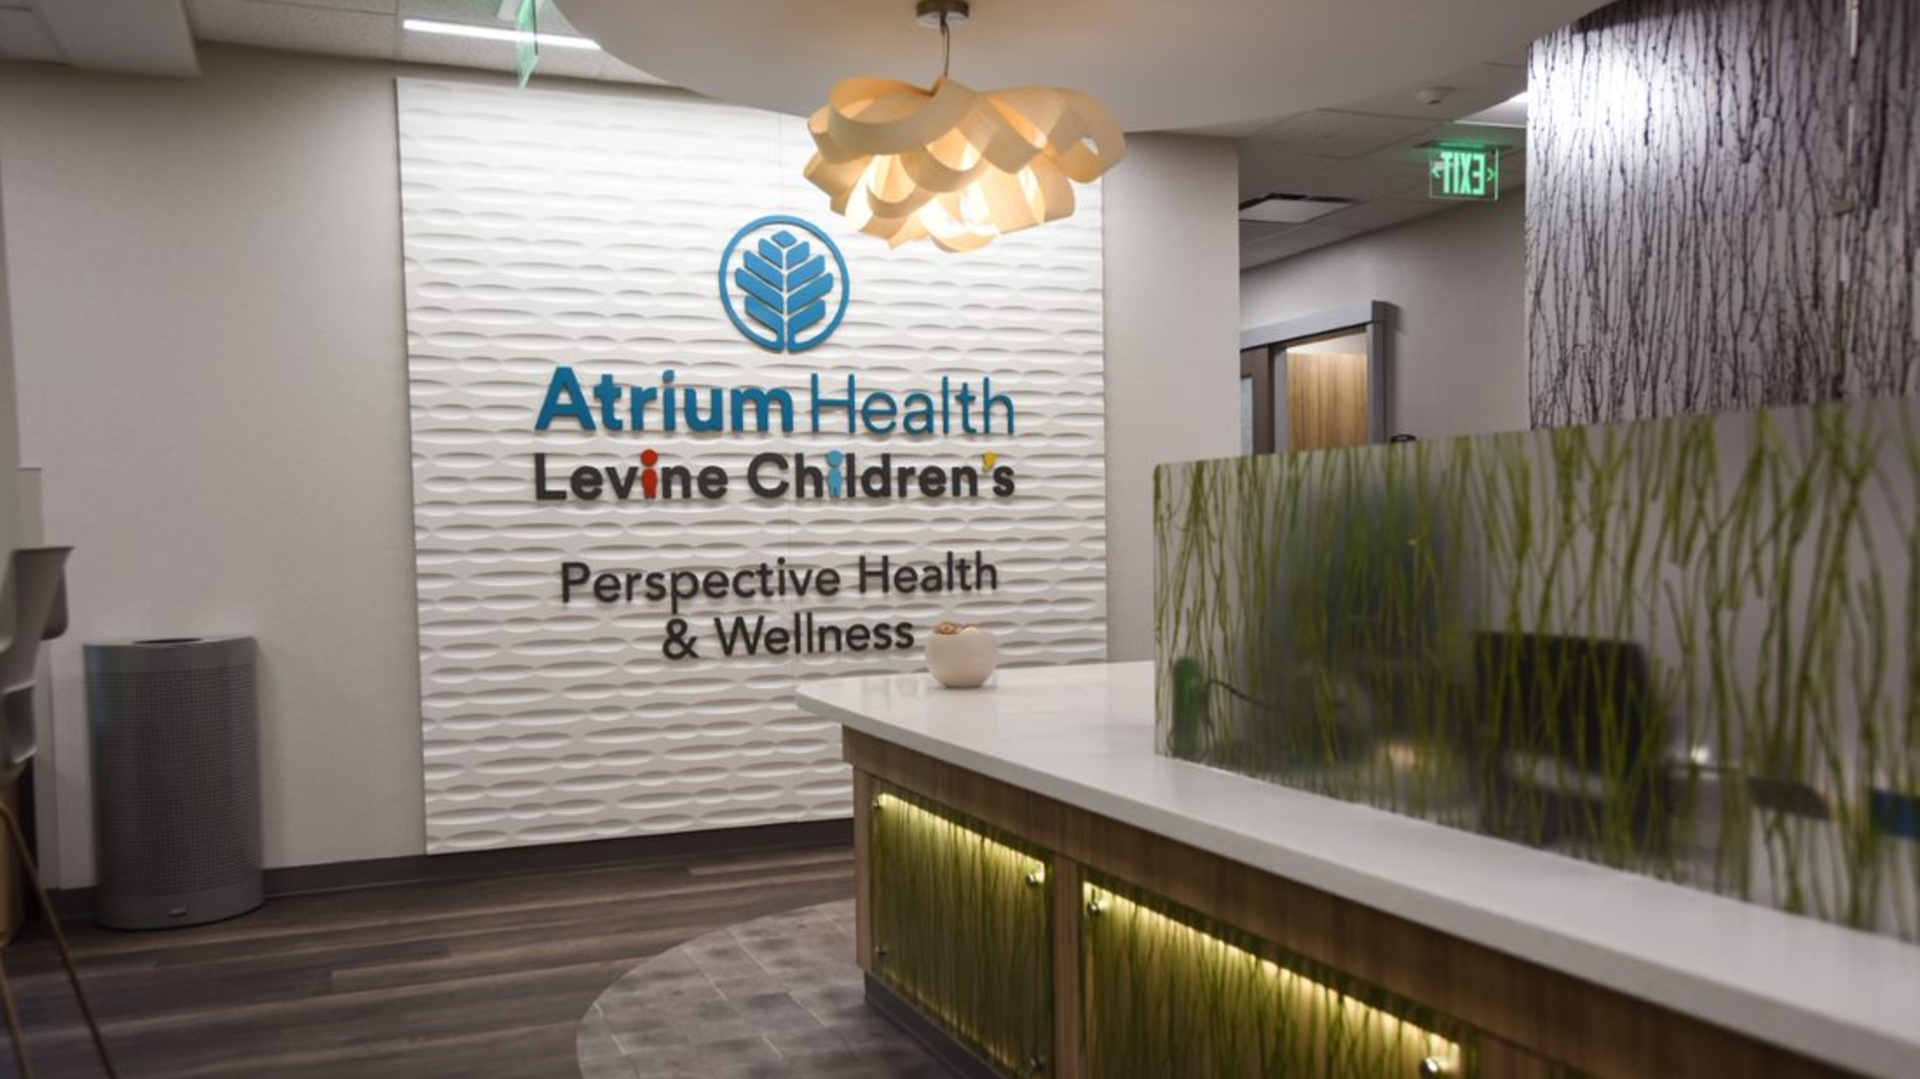 Atrium Health Levine Children's Perspective Health & Wellness